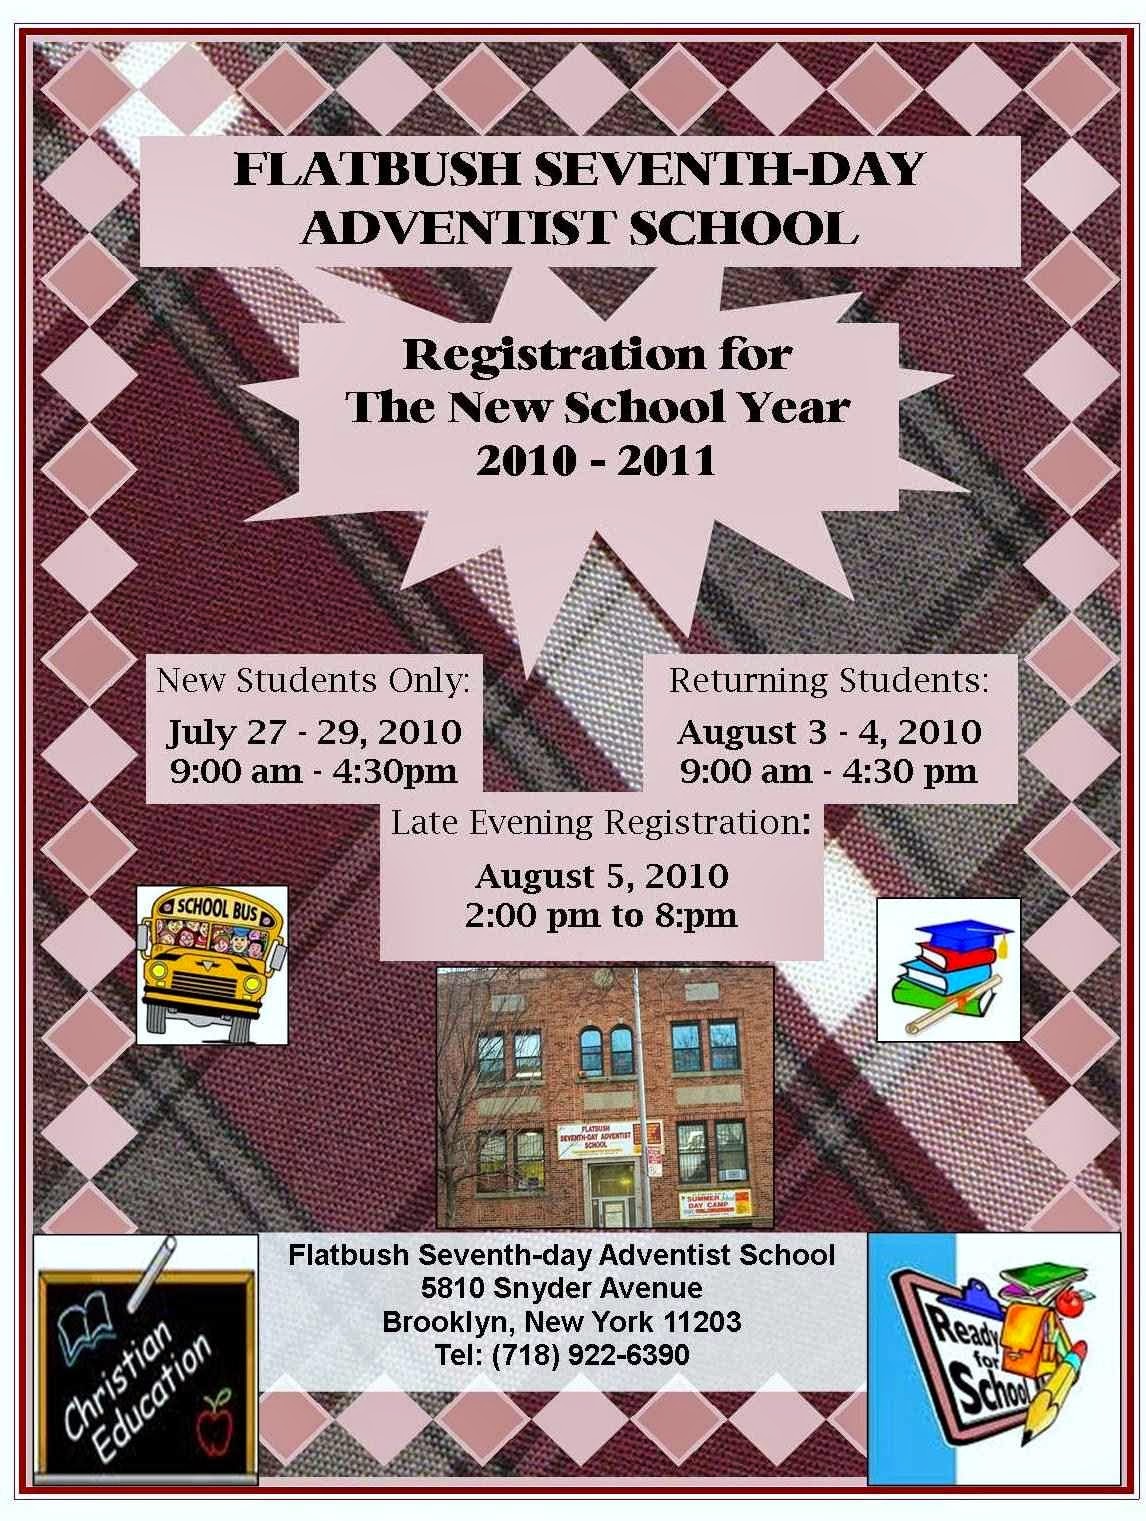 Photo of FLATBUSH SEVENTH-DAY ADVENTIST SCHOOL in Brooklyn City, New York, United States - 1 Picture of Point of interest, Establishment, School